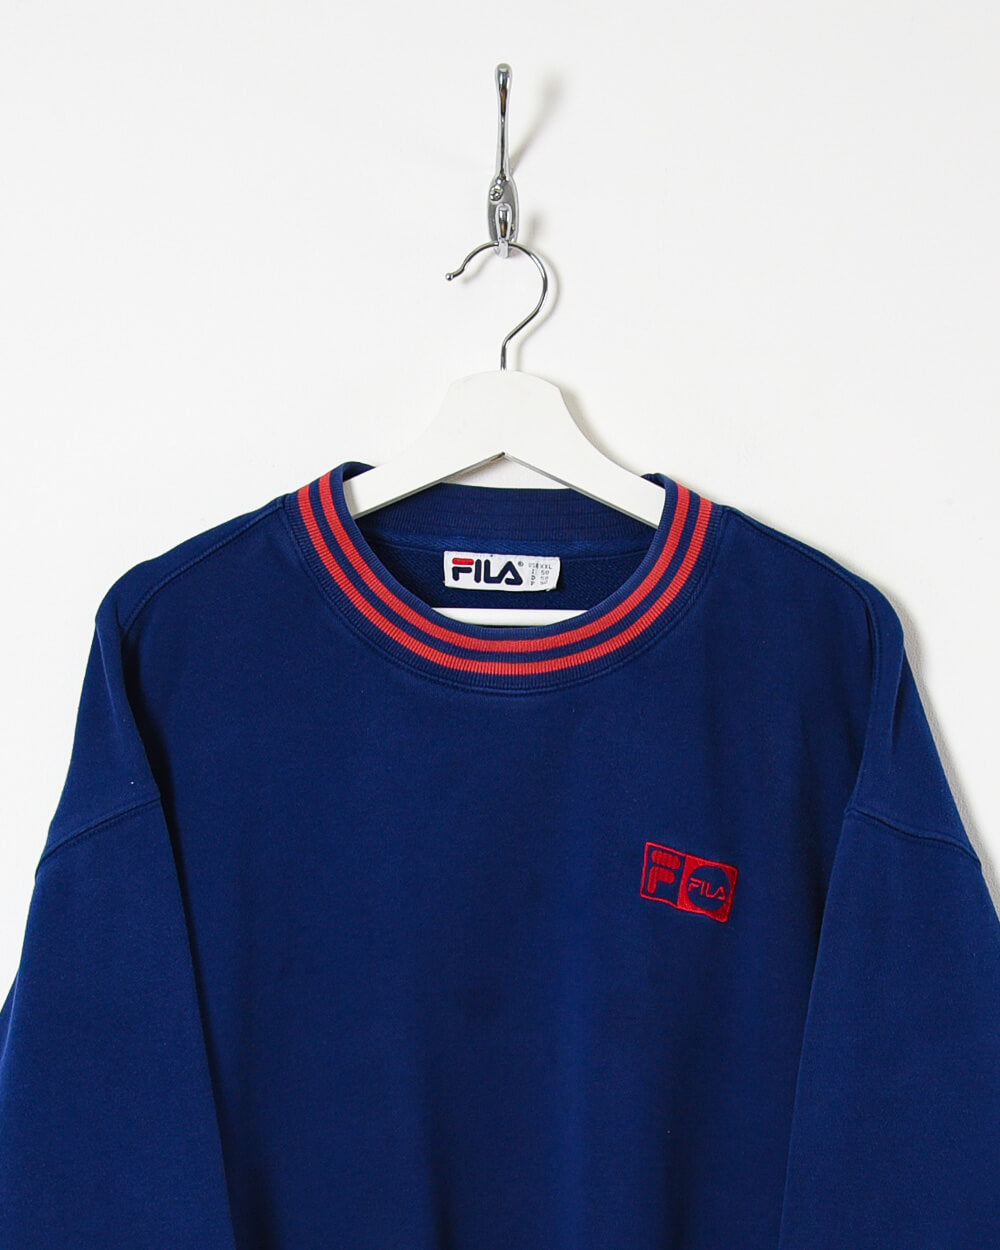 Fila Sweatshirt - XX-Large - Domno Vintage 90s, 80s, 00s Retro and Vintage Clothing 